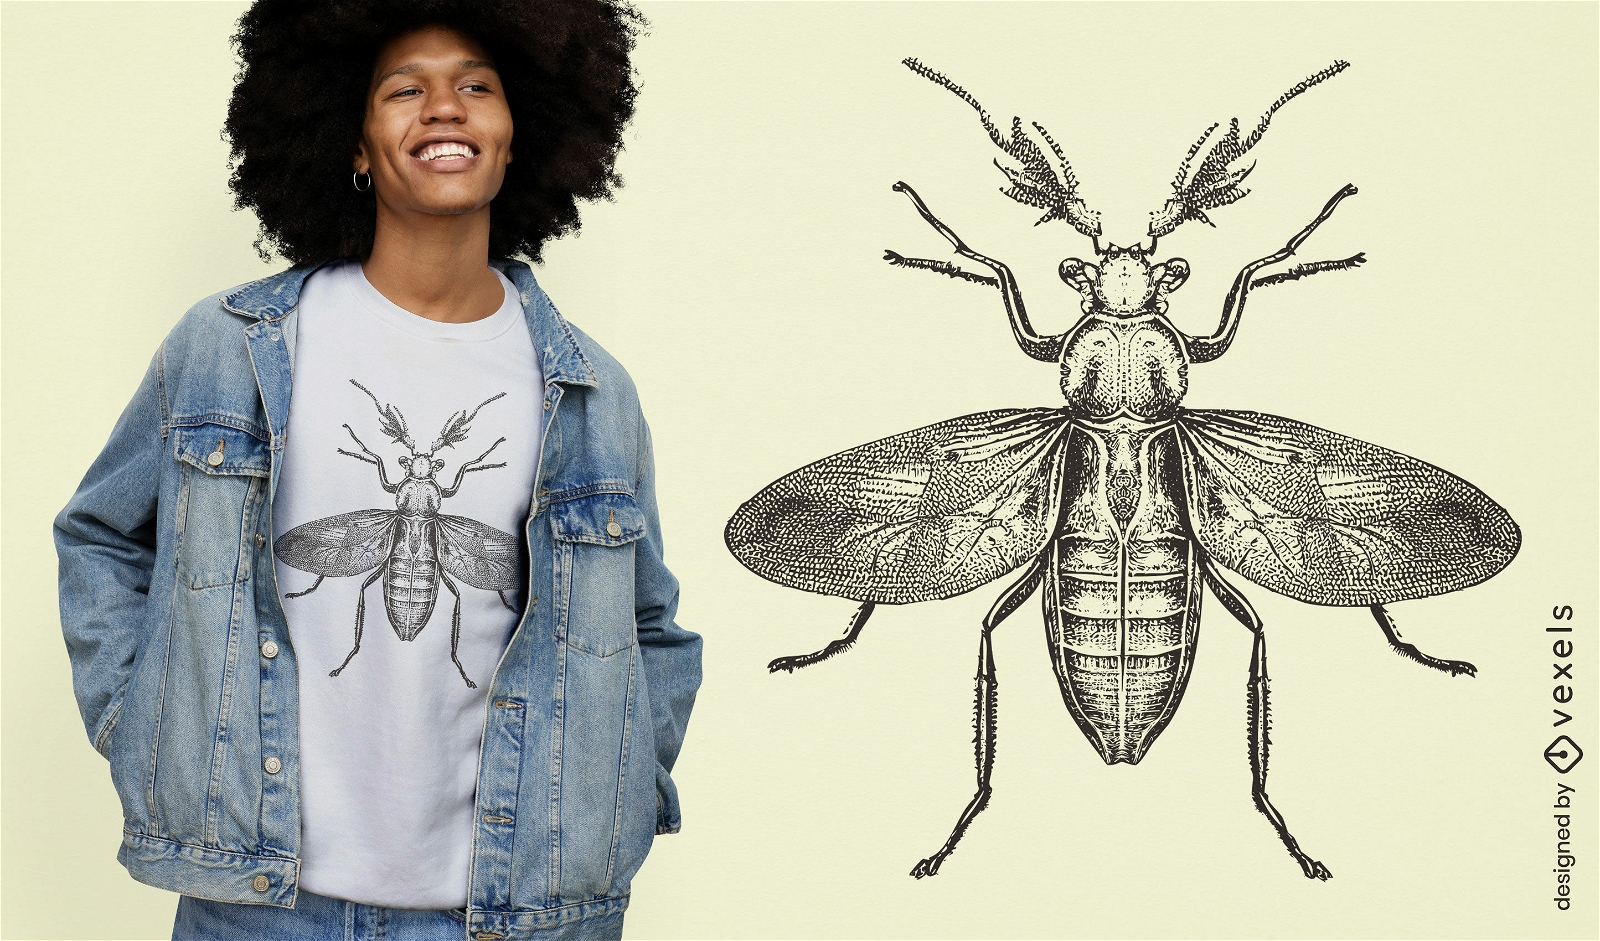 Dise?o de camiseta realista de insecto alado.